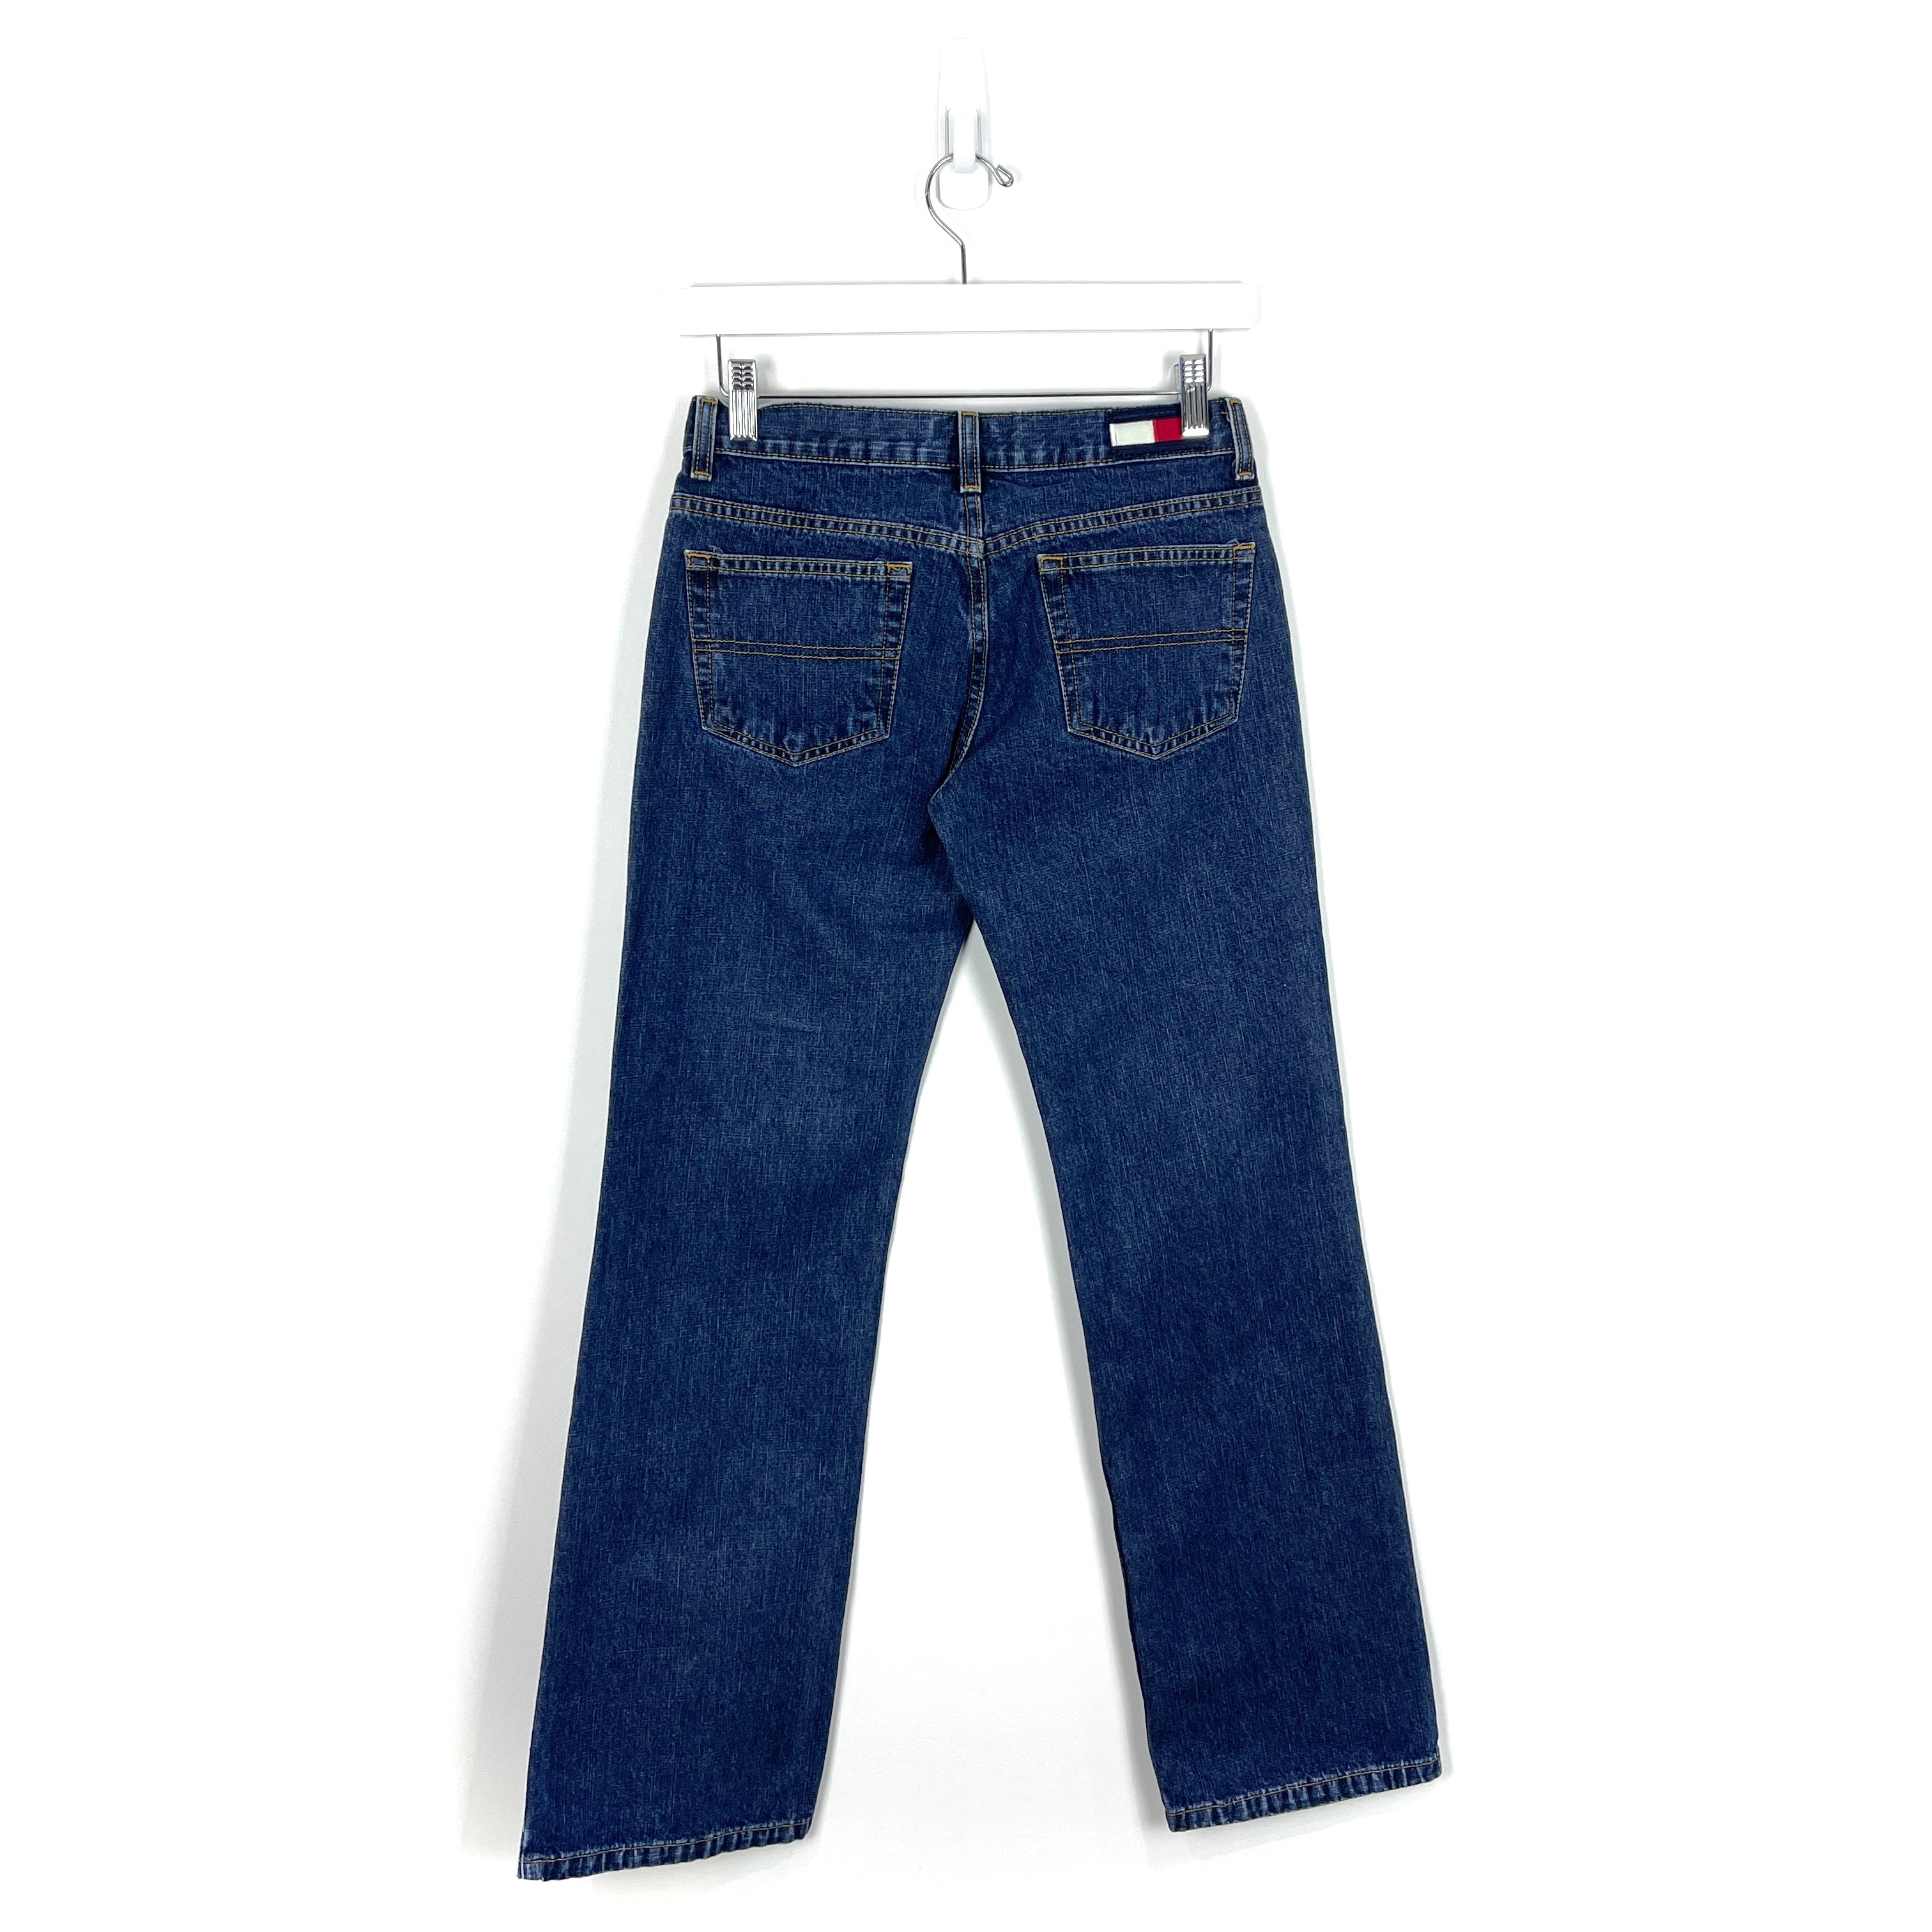 Vintage Tommy Hilfiger Jeans - Women's 26/29